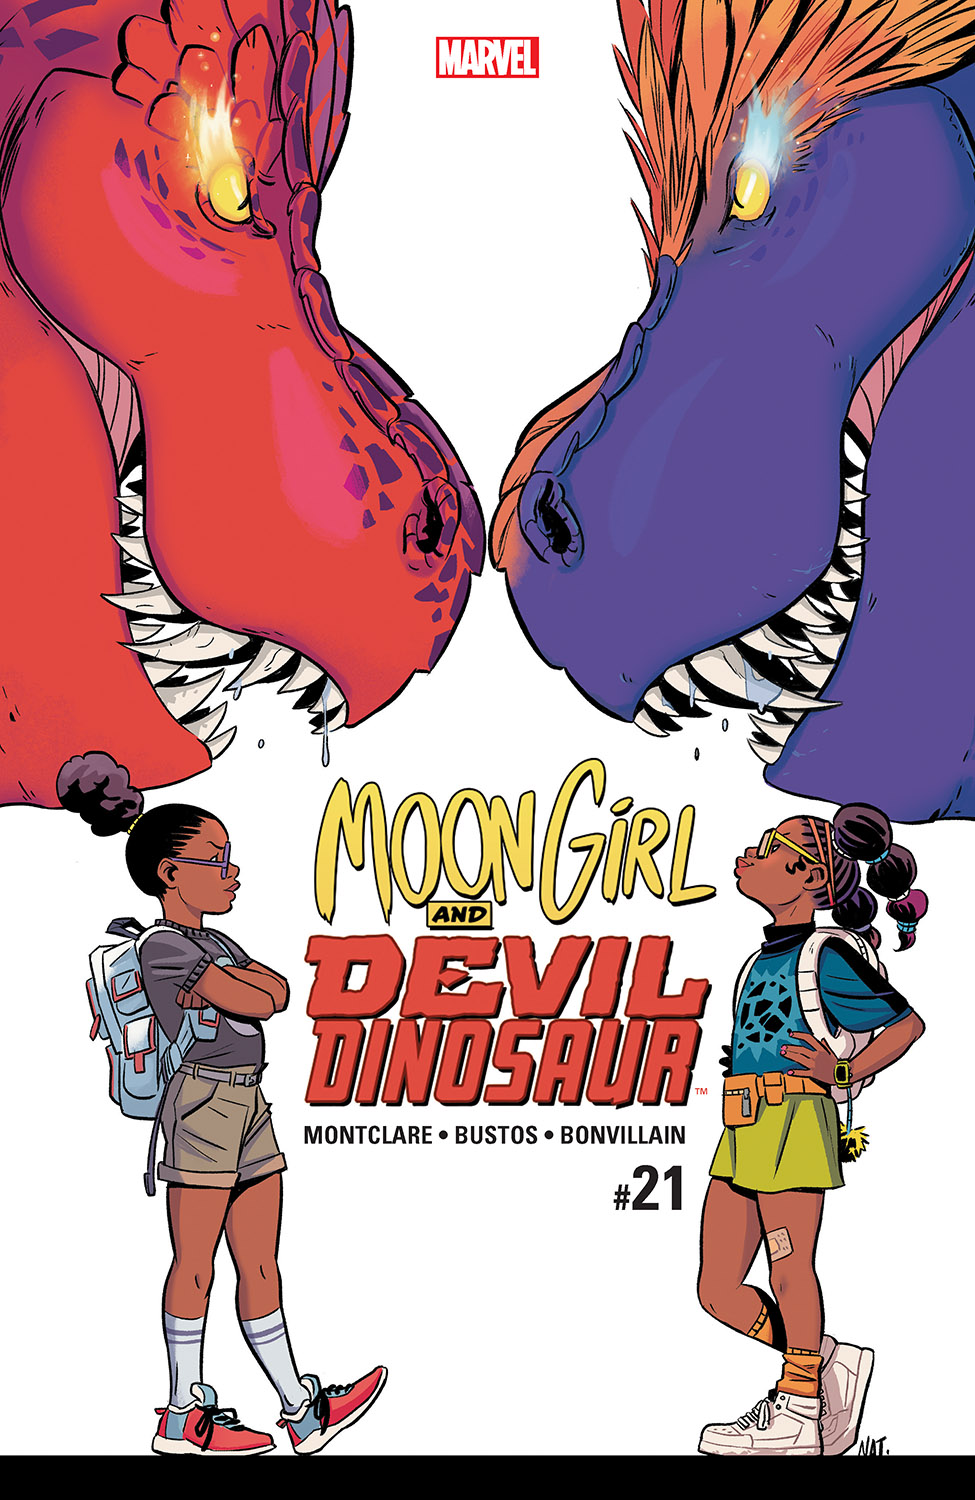 Moon Girl and Devil Dinosaur (2015) #21